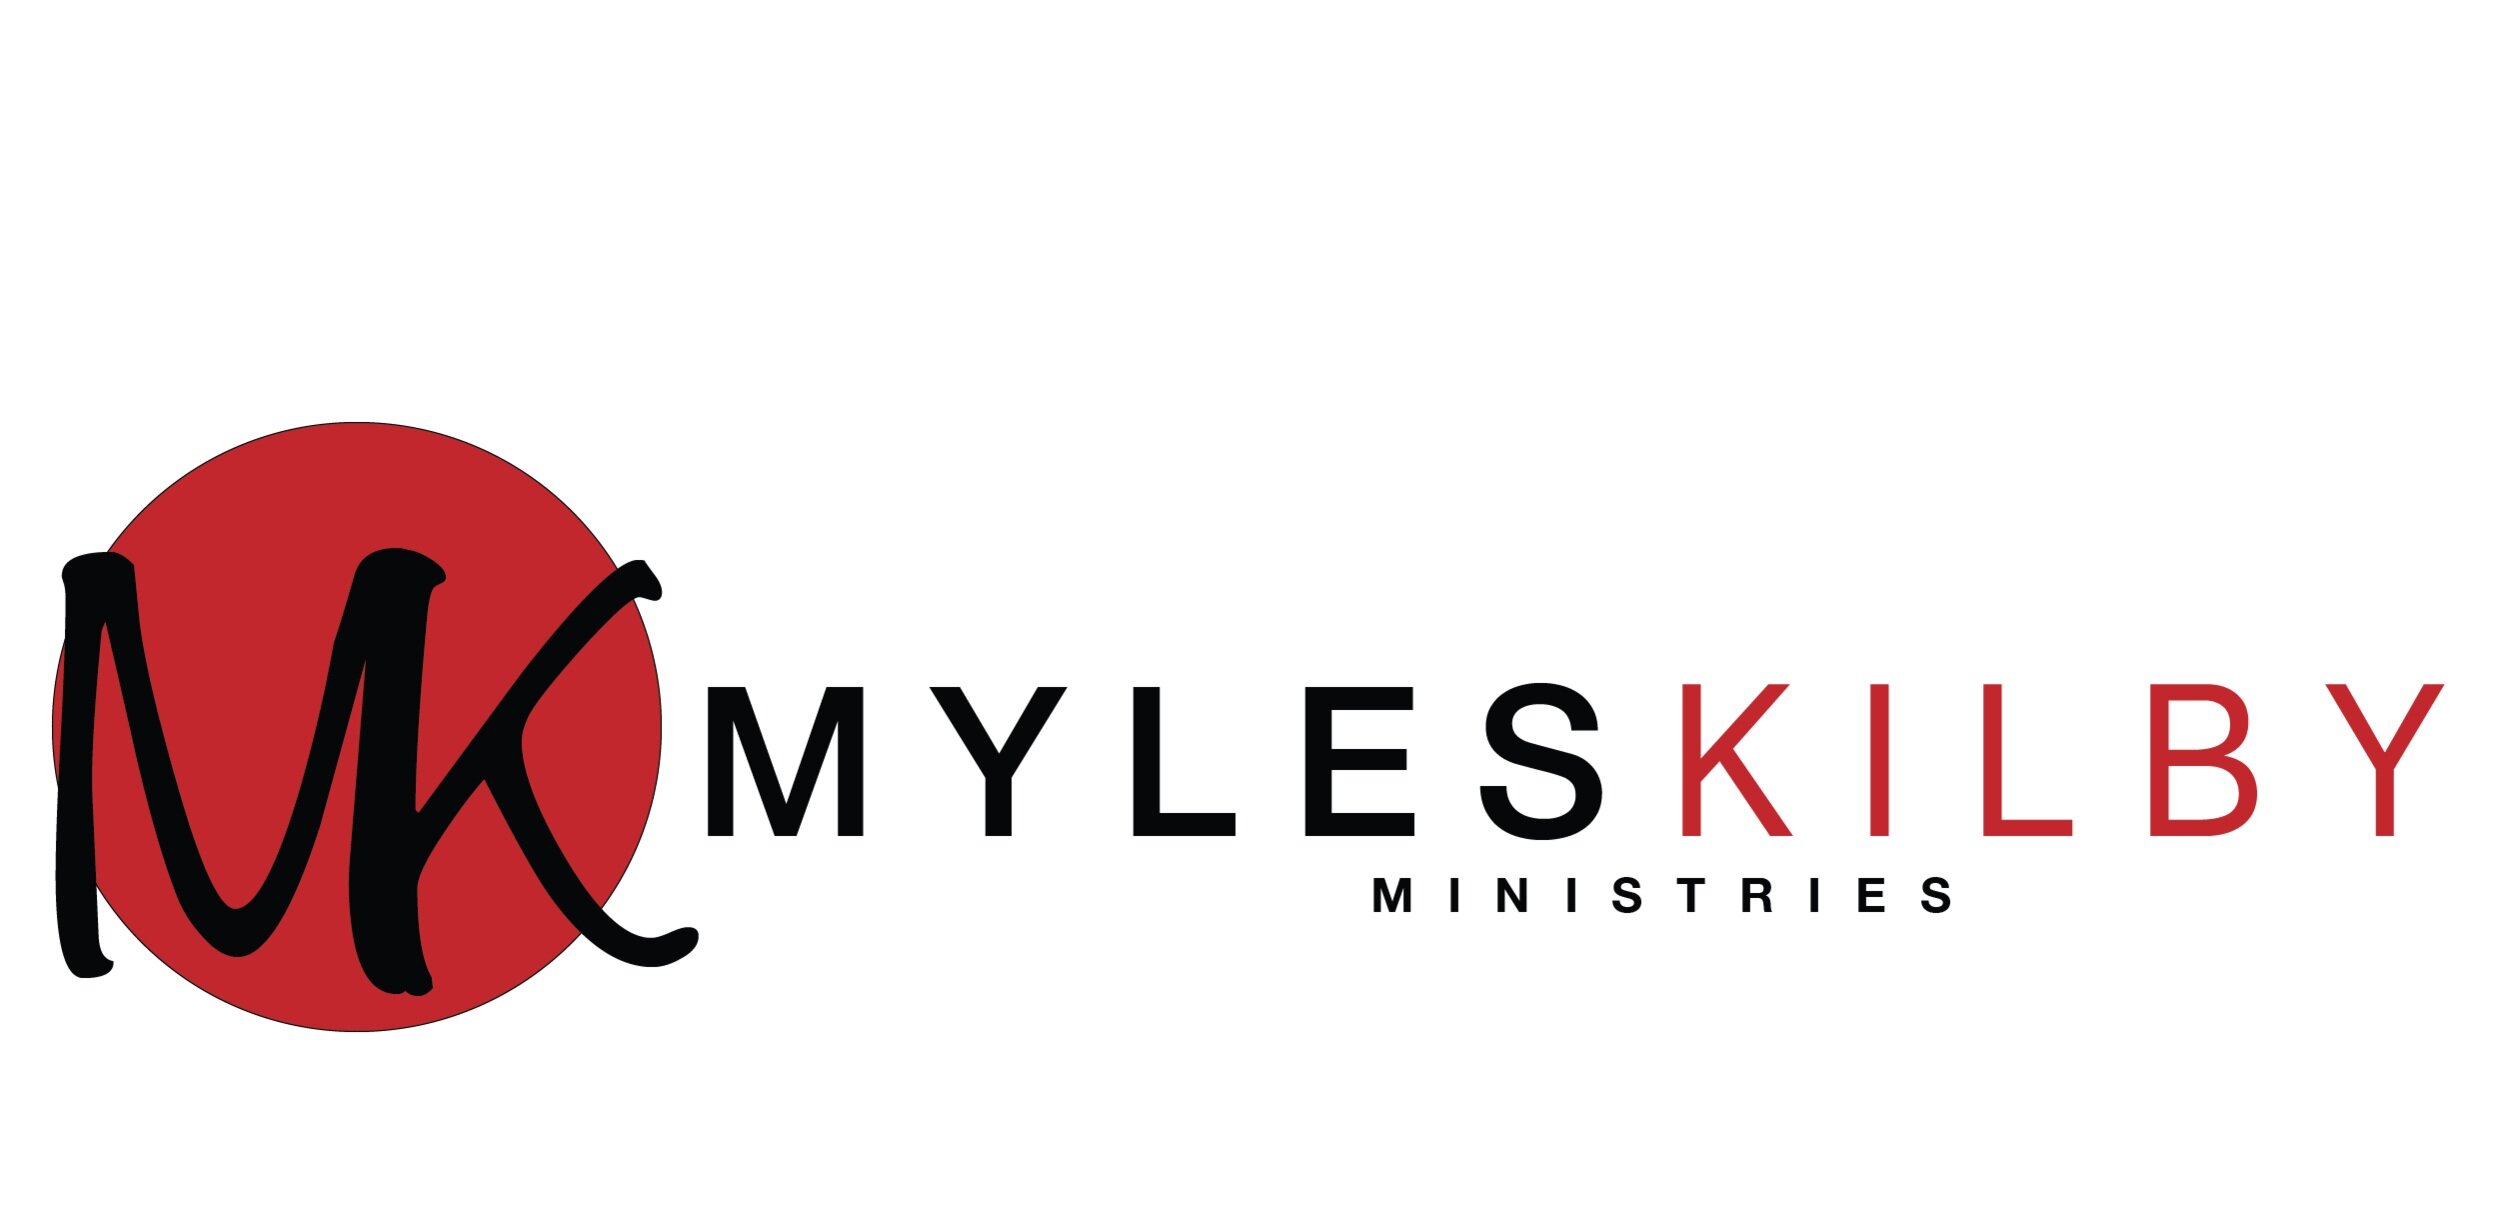 Myles Kilby Ministries 